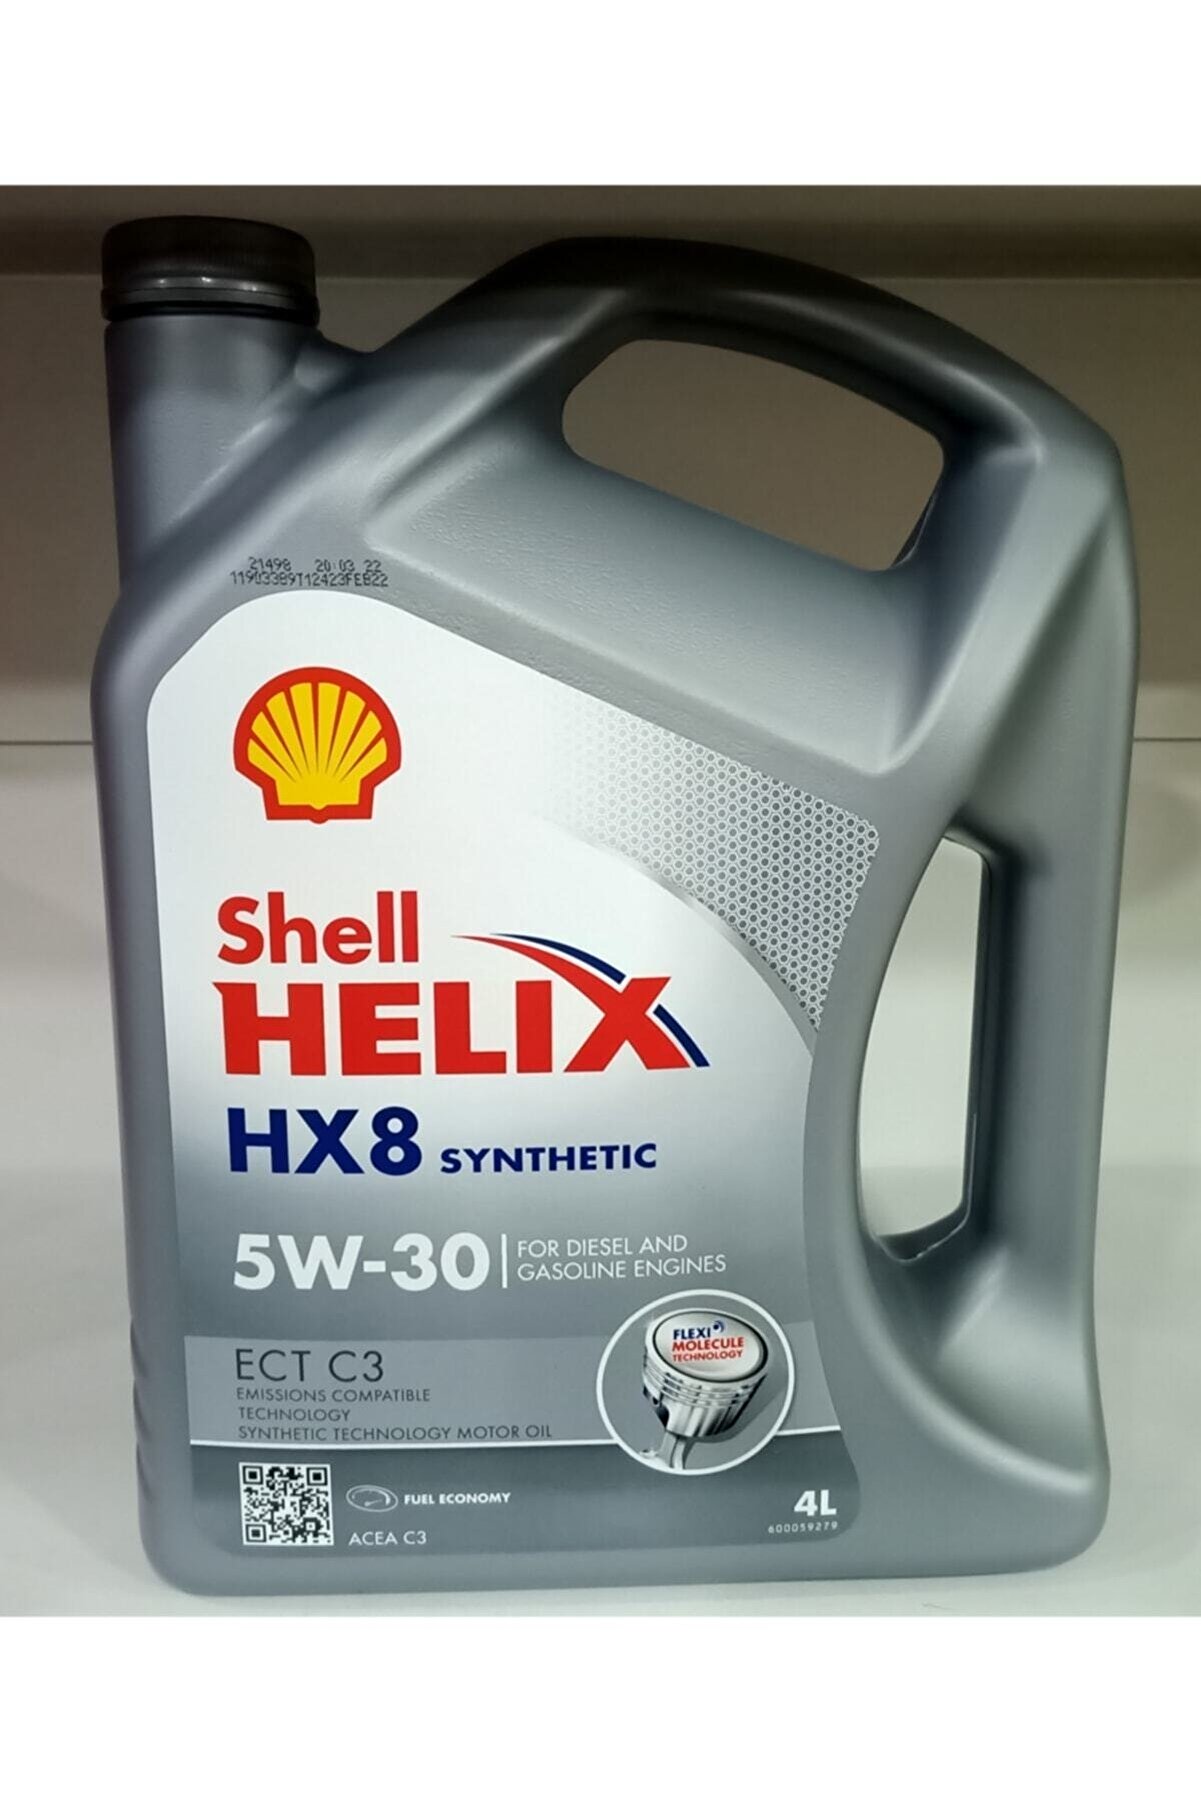 Shell Helix Hx8 Syn Ect C 3(PARTİKÜL FİLİTRELİ ARAÇLARA UYGUN)?